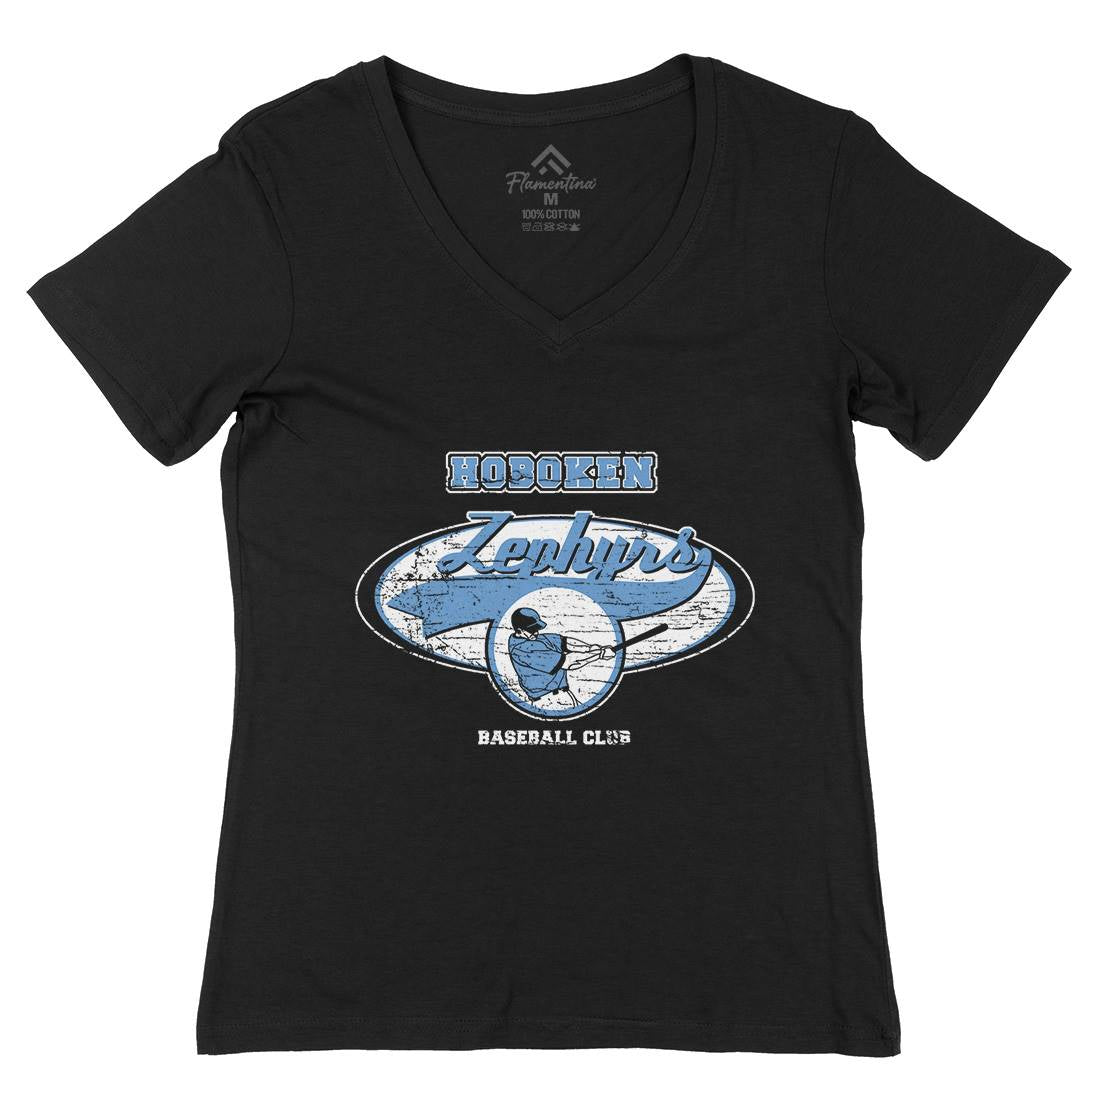 Hoboken Zephyrs Womens Organic V-Neck T-Shirt Sport D119